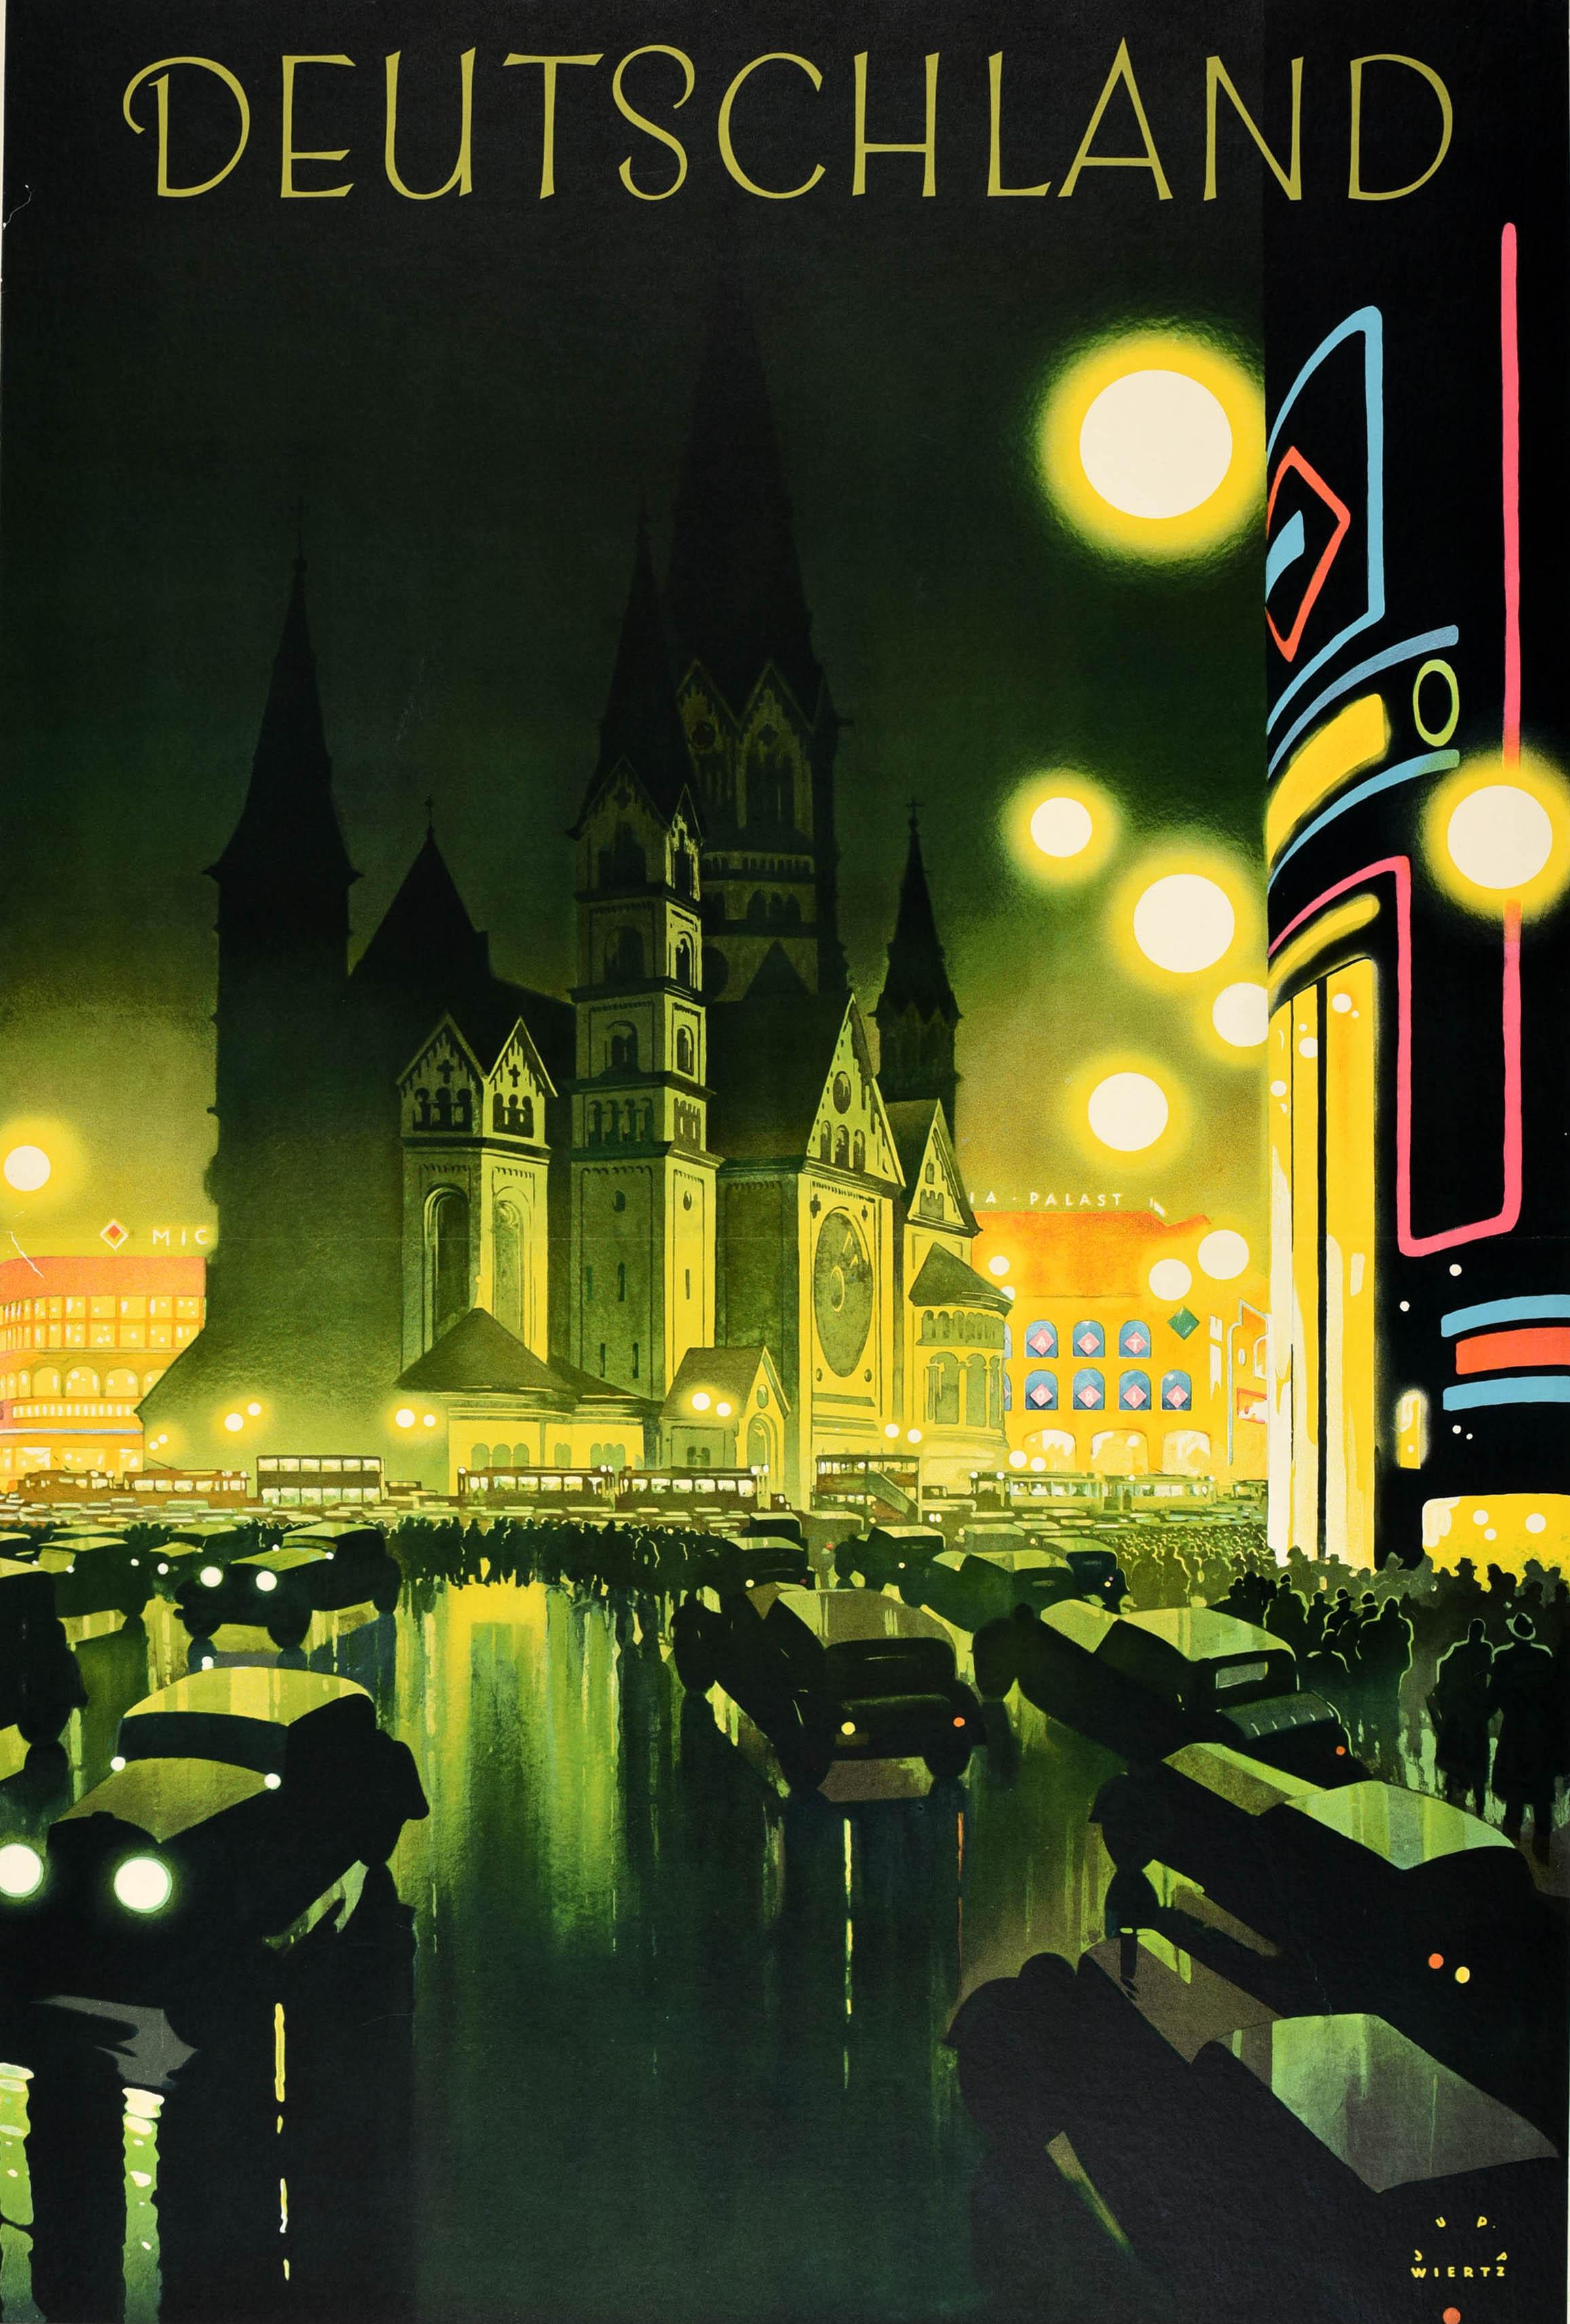 Original Vintage Travel Advertising Poster Germany Berlin Night Art Deco Design - Print by Jupp Wiertz